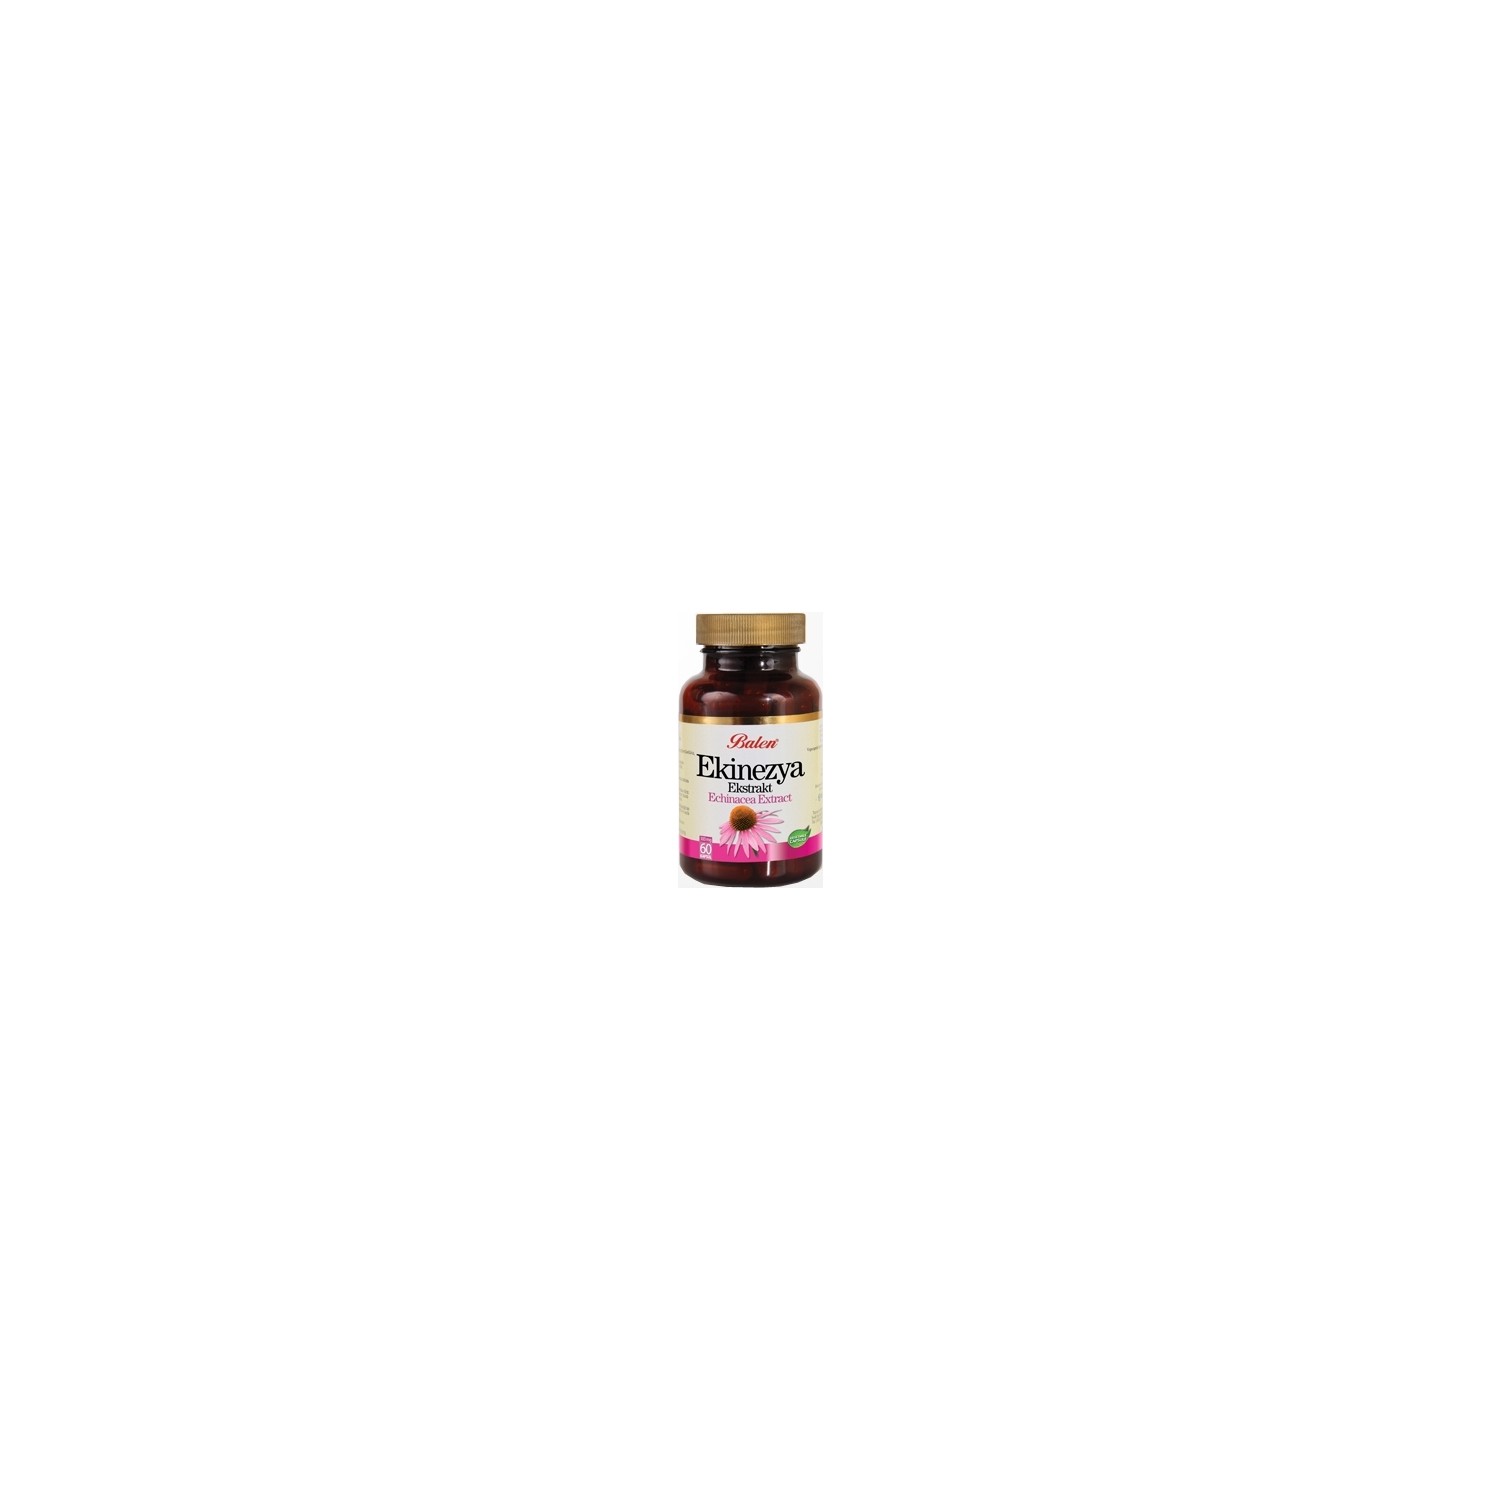 Пищевая добавка Balen эхинацея 300 мг, 2 упаковки по 60 капсул royal jelly 1 500 mg 60 veg capsules